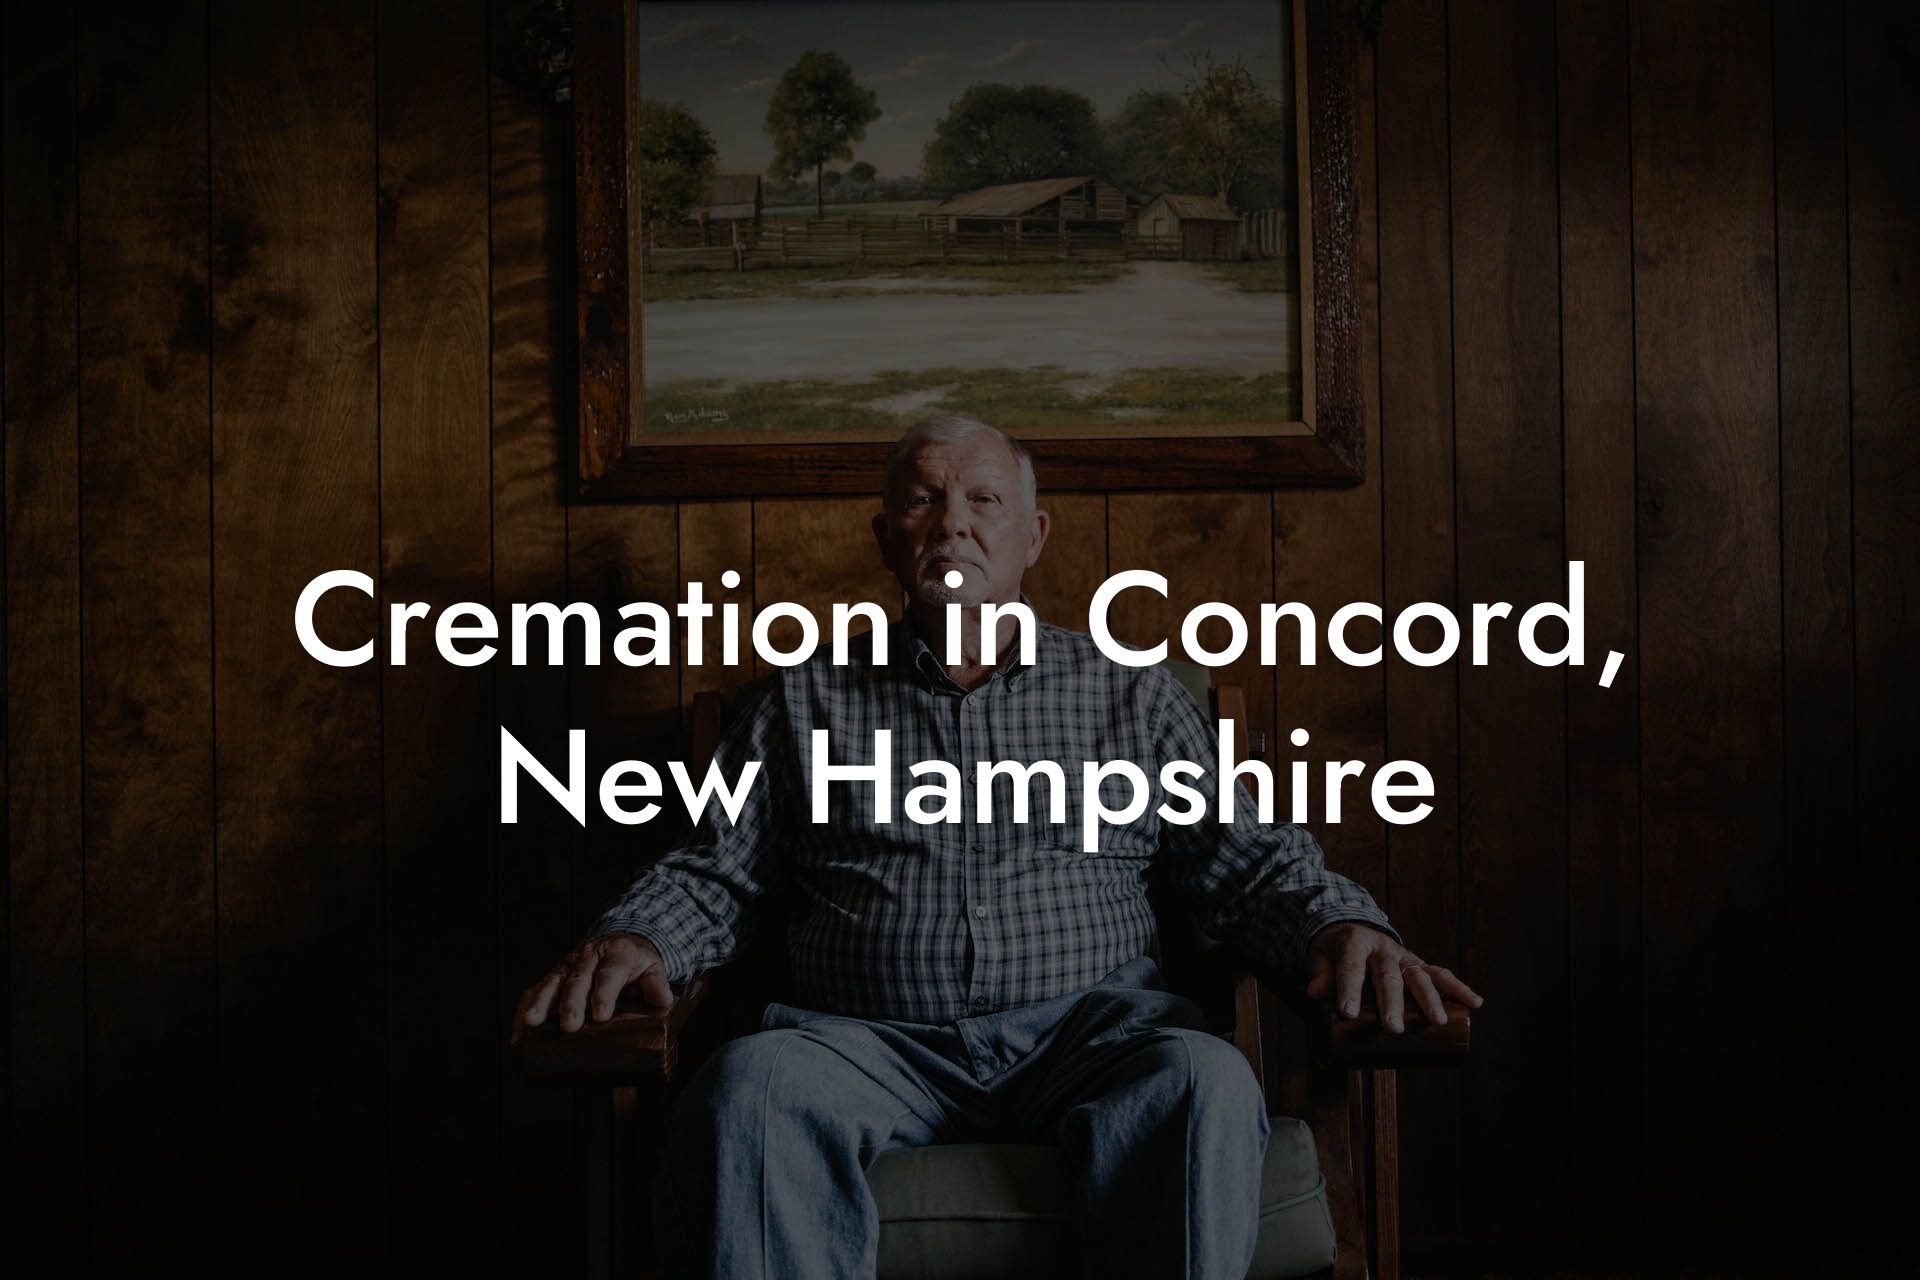 Cremation in Concord, New Hampshire